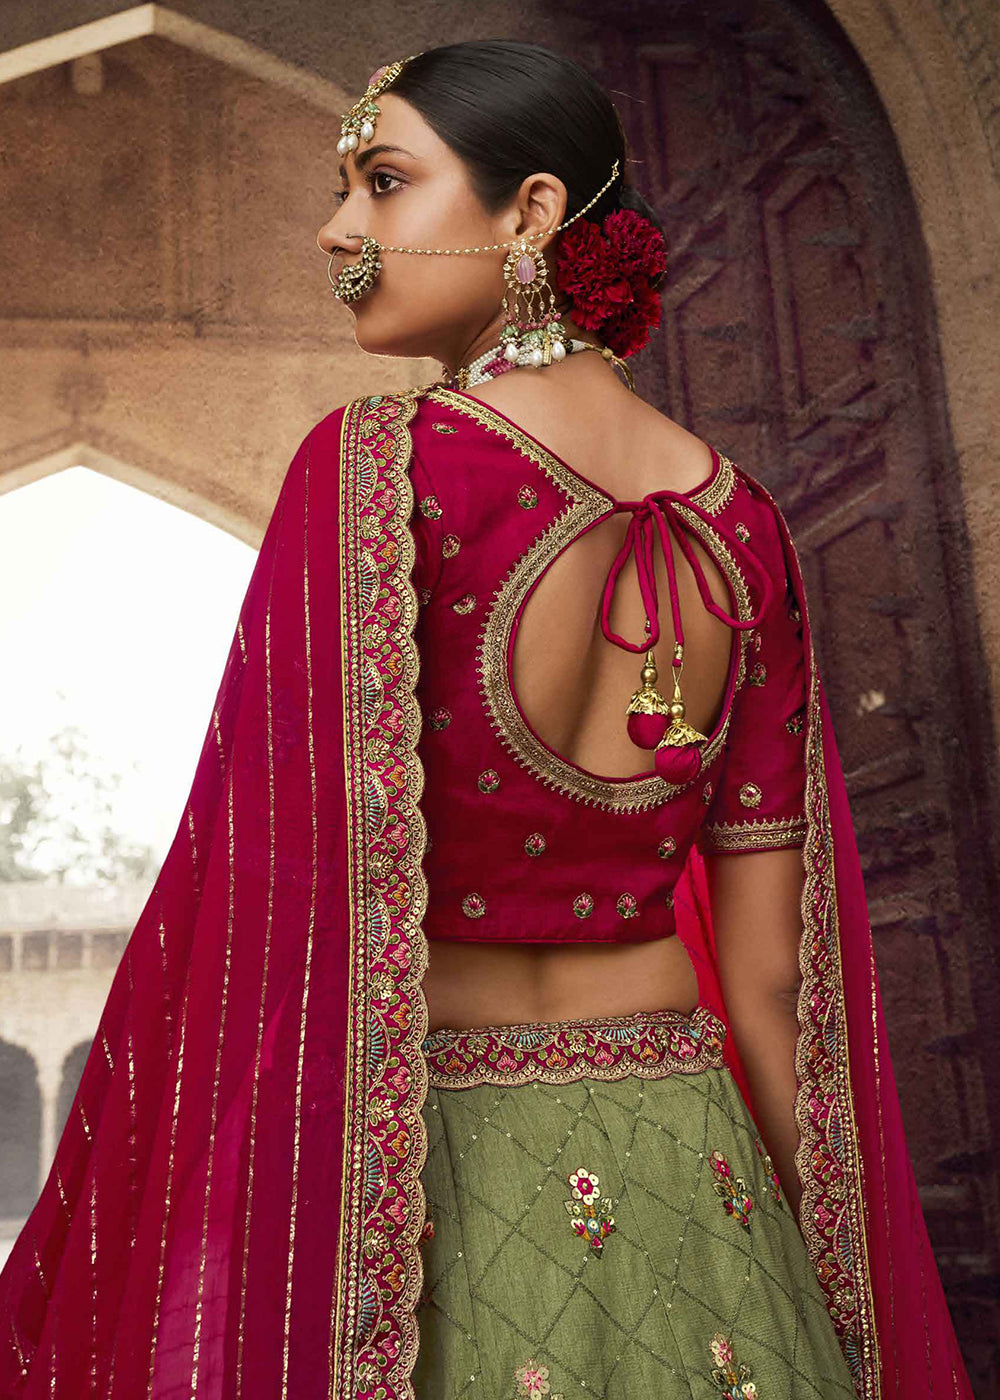 Buy Now Heavy Viscose Green & Rani Pink Embroidered Bridal Lehenga Choli Online in USA, UK, Canada & Worldwide at Empress Clothing. 